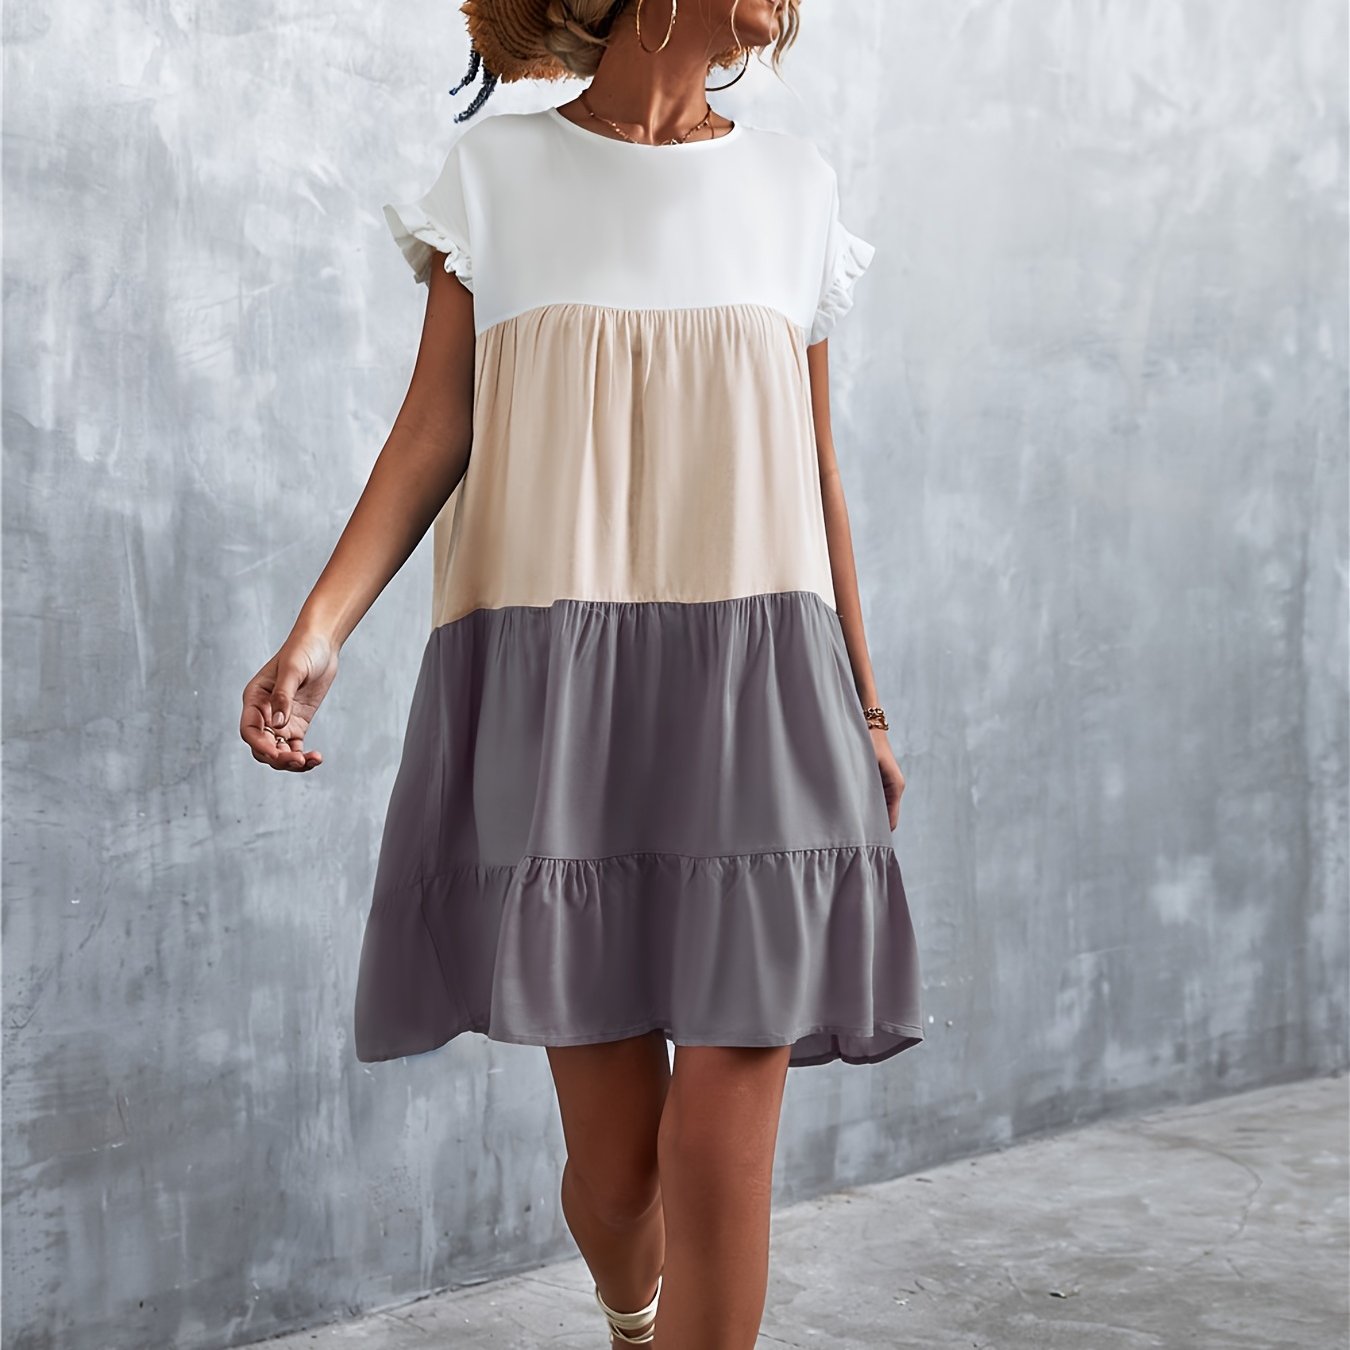 「lovevop」Women's Summer Dress Sleeveless Ruffle Sleeve Round Neck Mini Dress Color Block Loose Short Flowy Pleated Dress